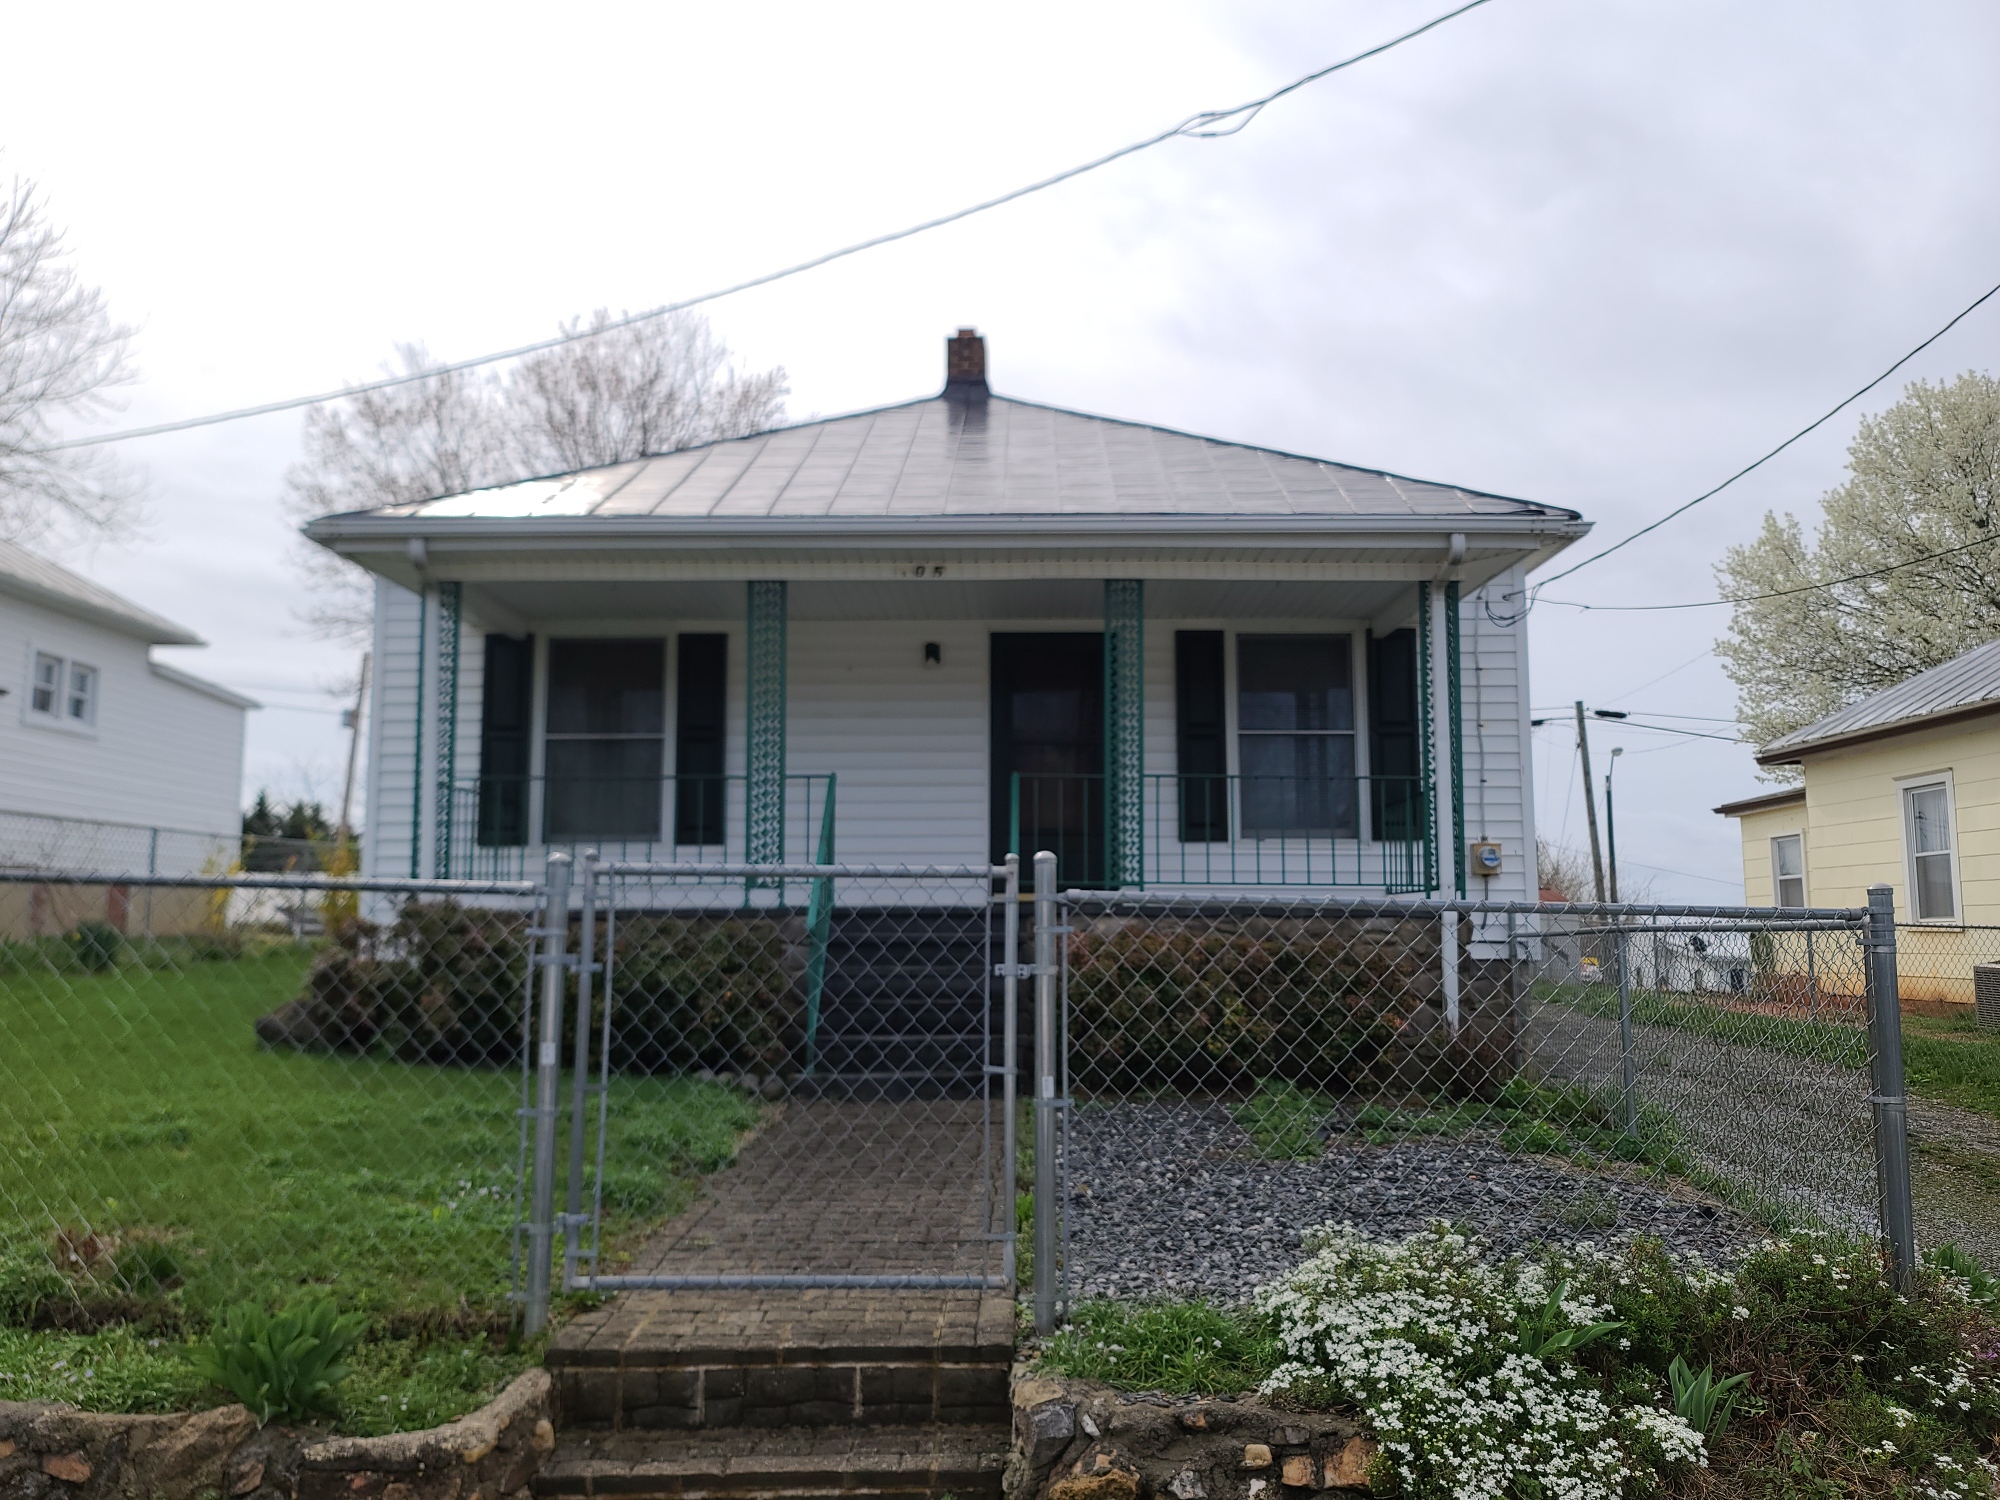 Leanor Street #105 Rocky Mount, VA 24151 Rents for $900